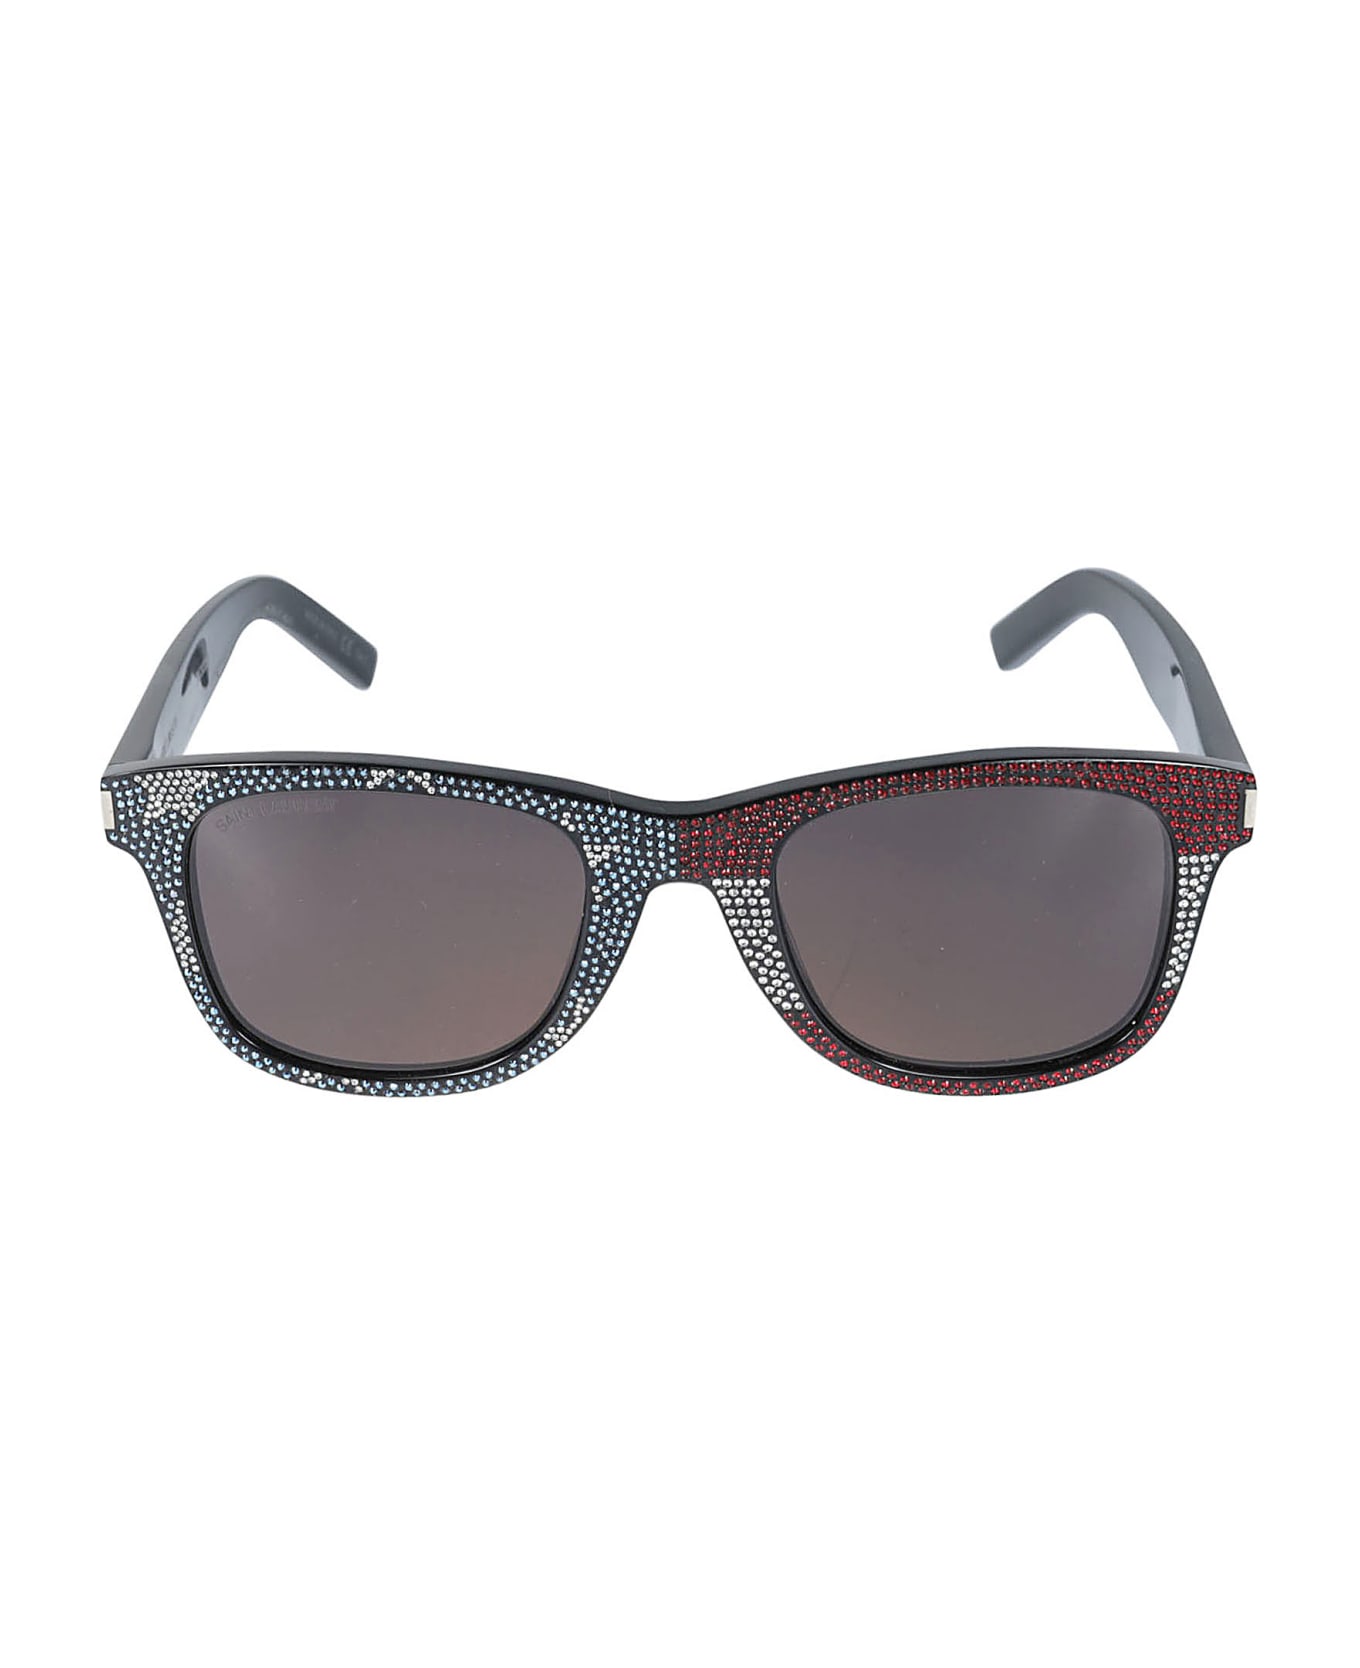 Saint Laurent Eyewear Square Frame Studded Sunglasses - Black/Grey サングラス